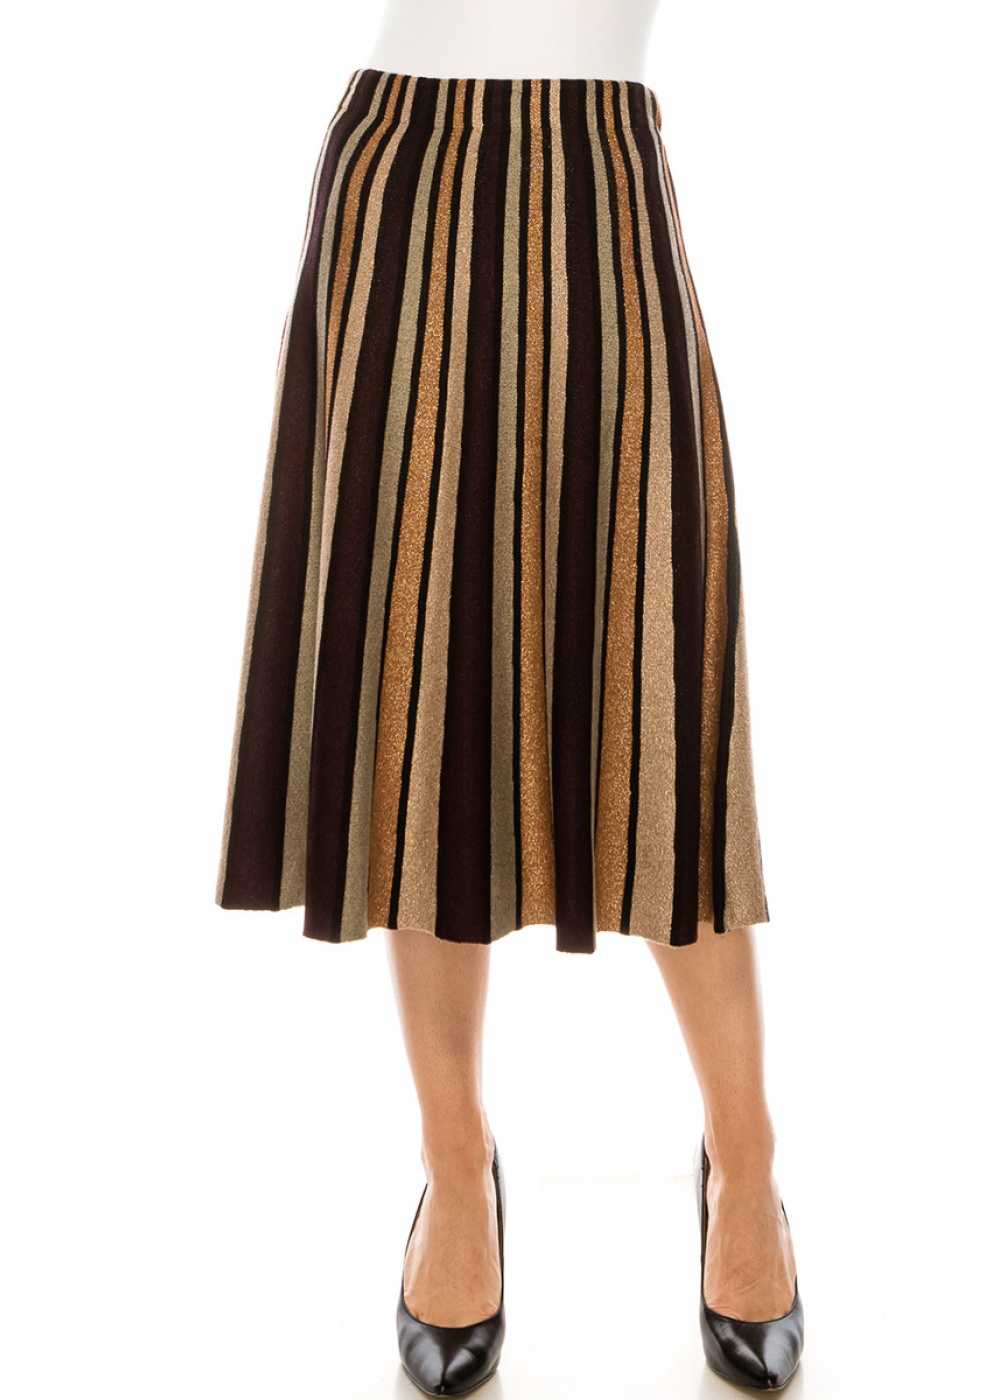 Shiny striped lurex skirt